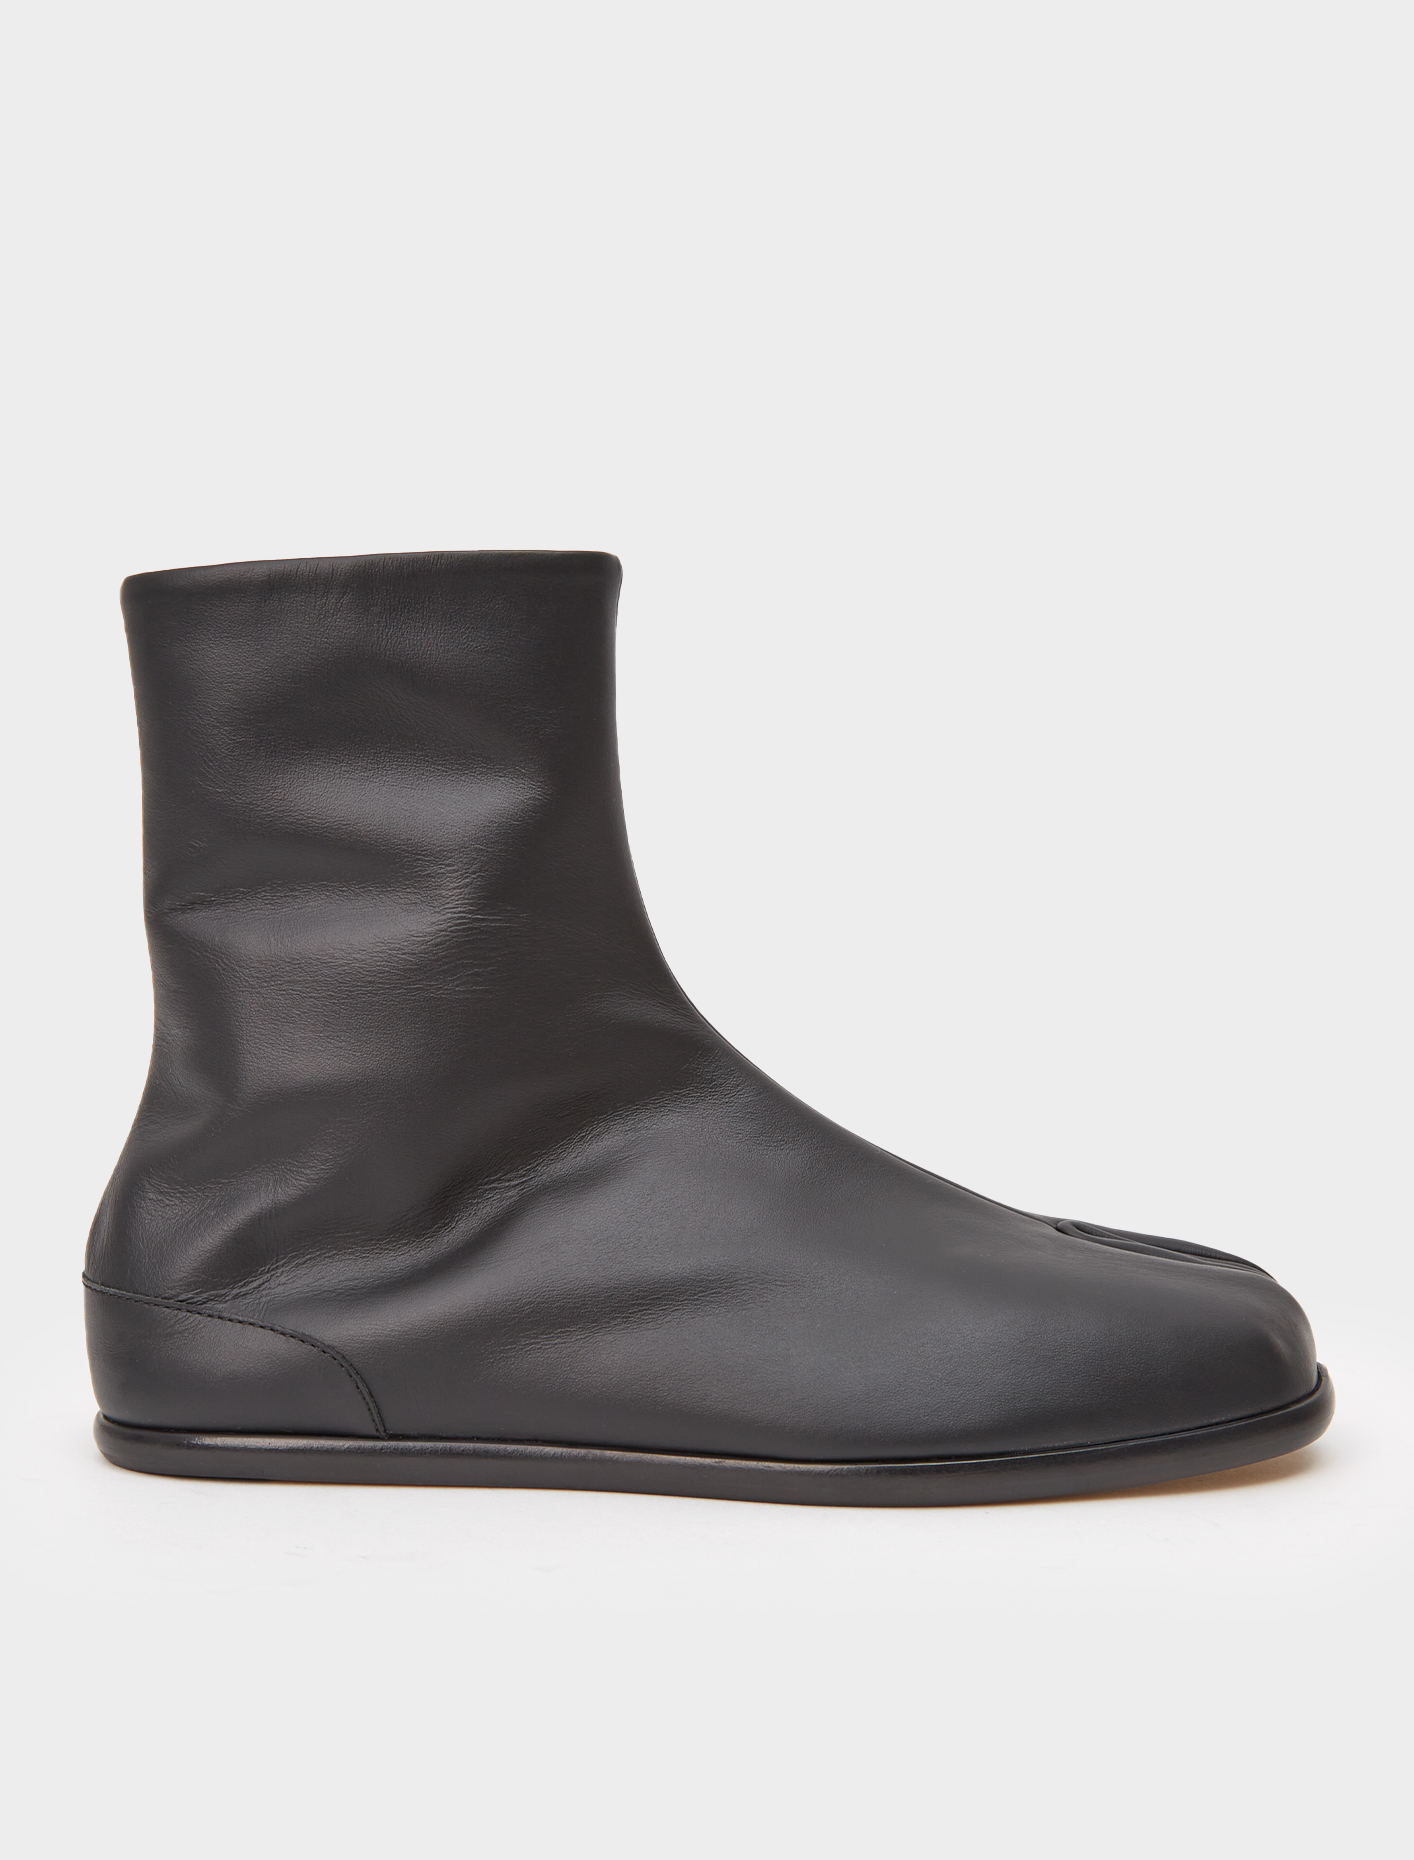 Maison Margiela Tabi Leather Ankle Boots on Sale, 56% OFF |  www.ingeniovirtual.com